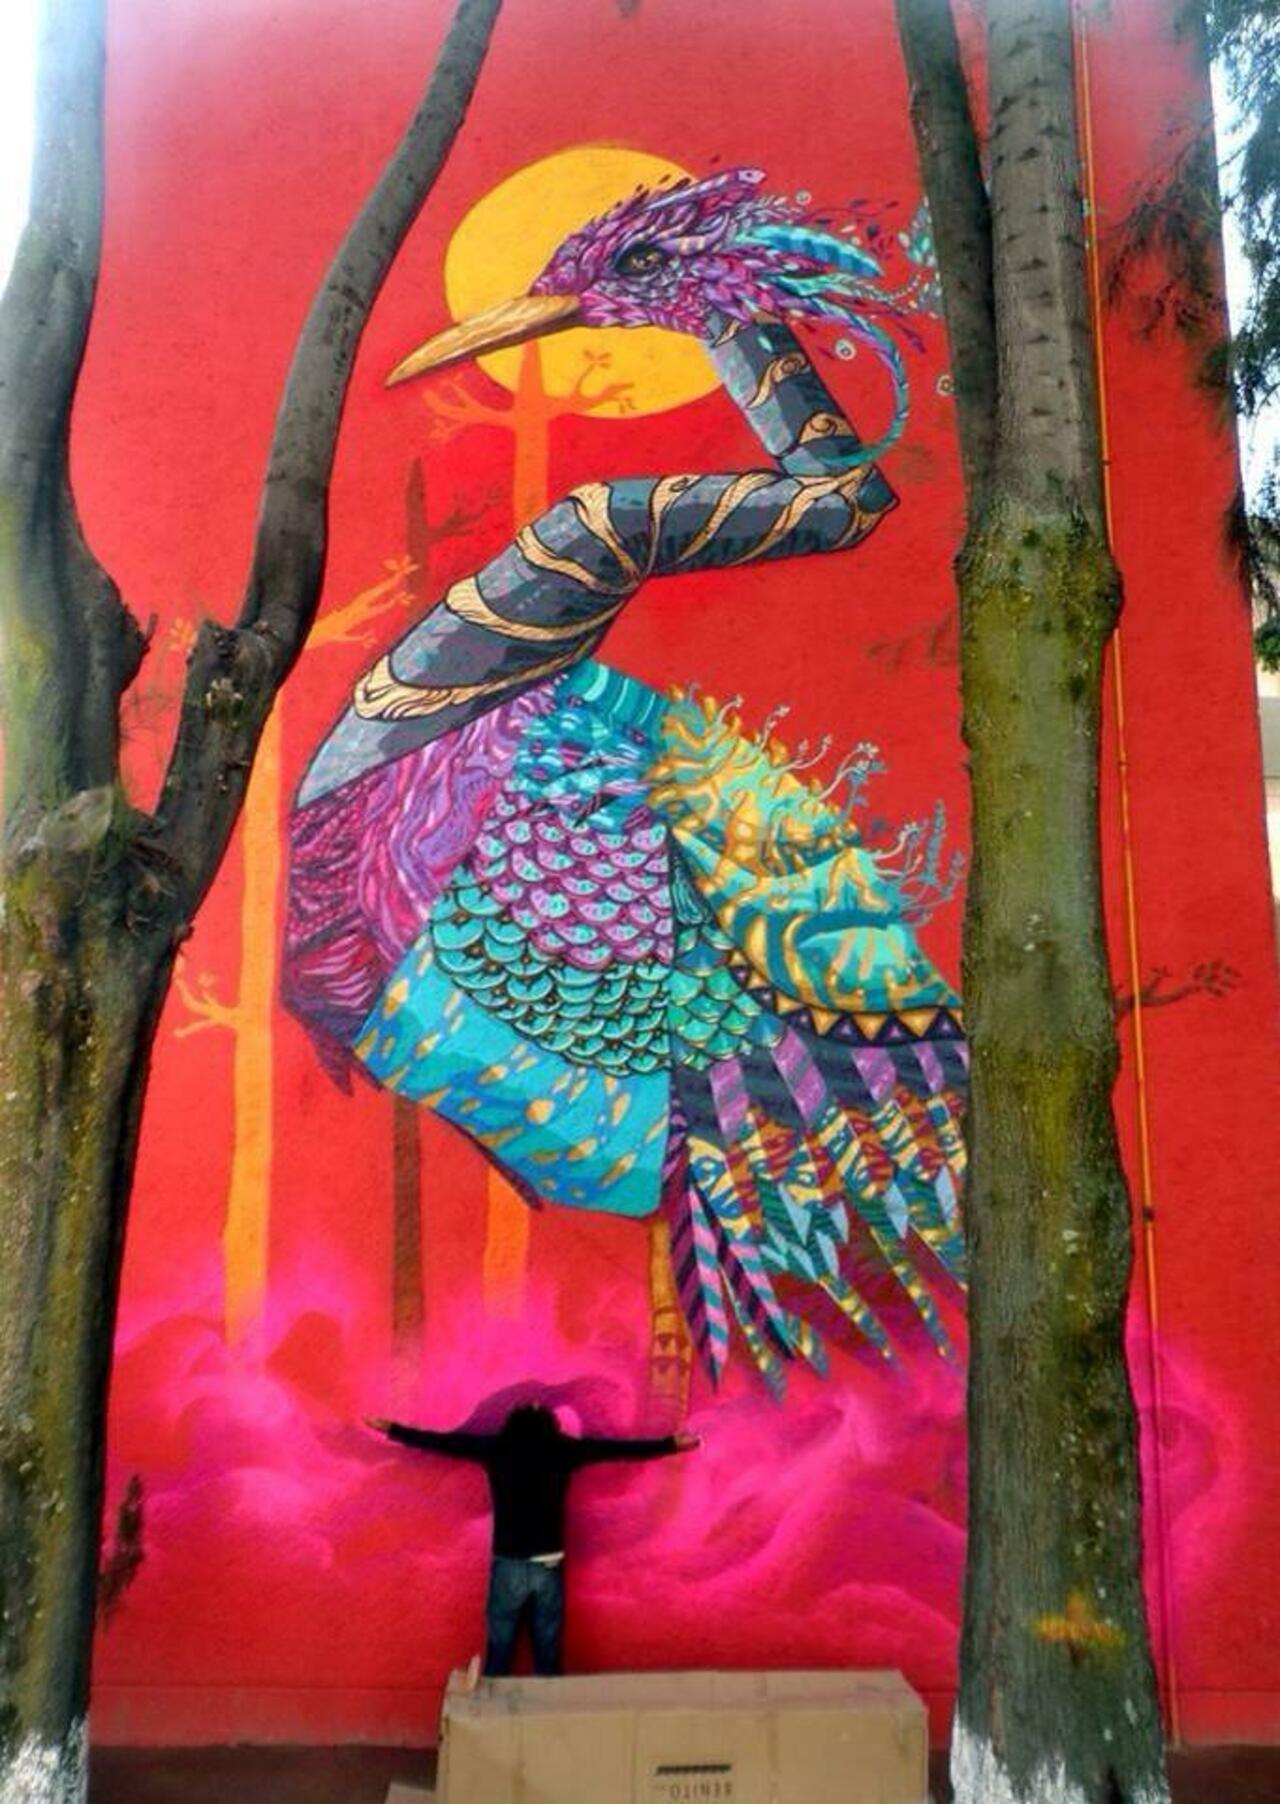 'Songs of Colour'

Sublime Nature in Street Art by NacHo Wm ft. Farid Rueda 

#art #arte #graffiti #streetart http://t.co/zM6HGecjZD